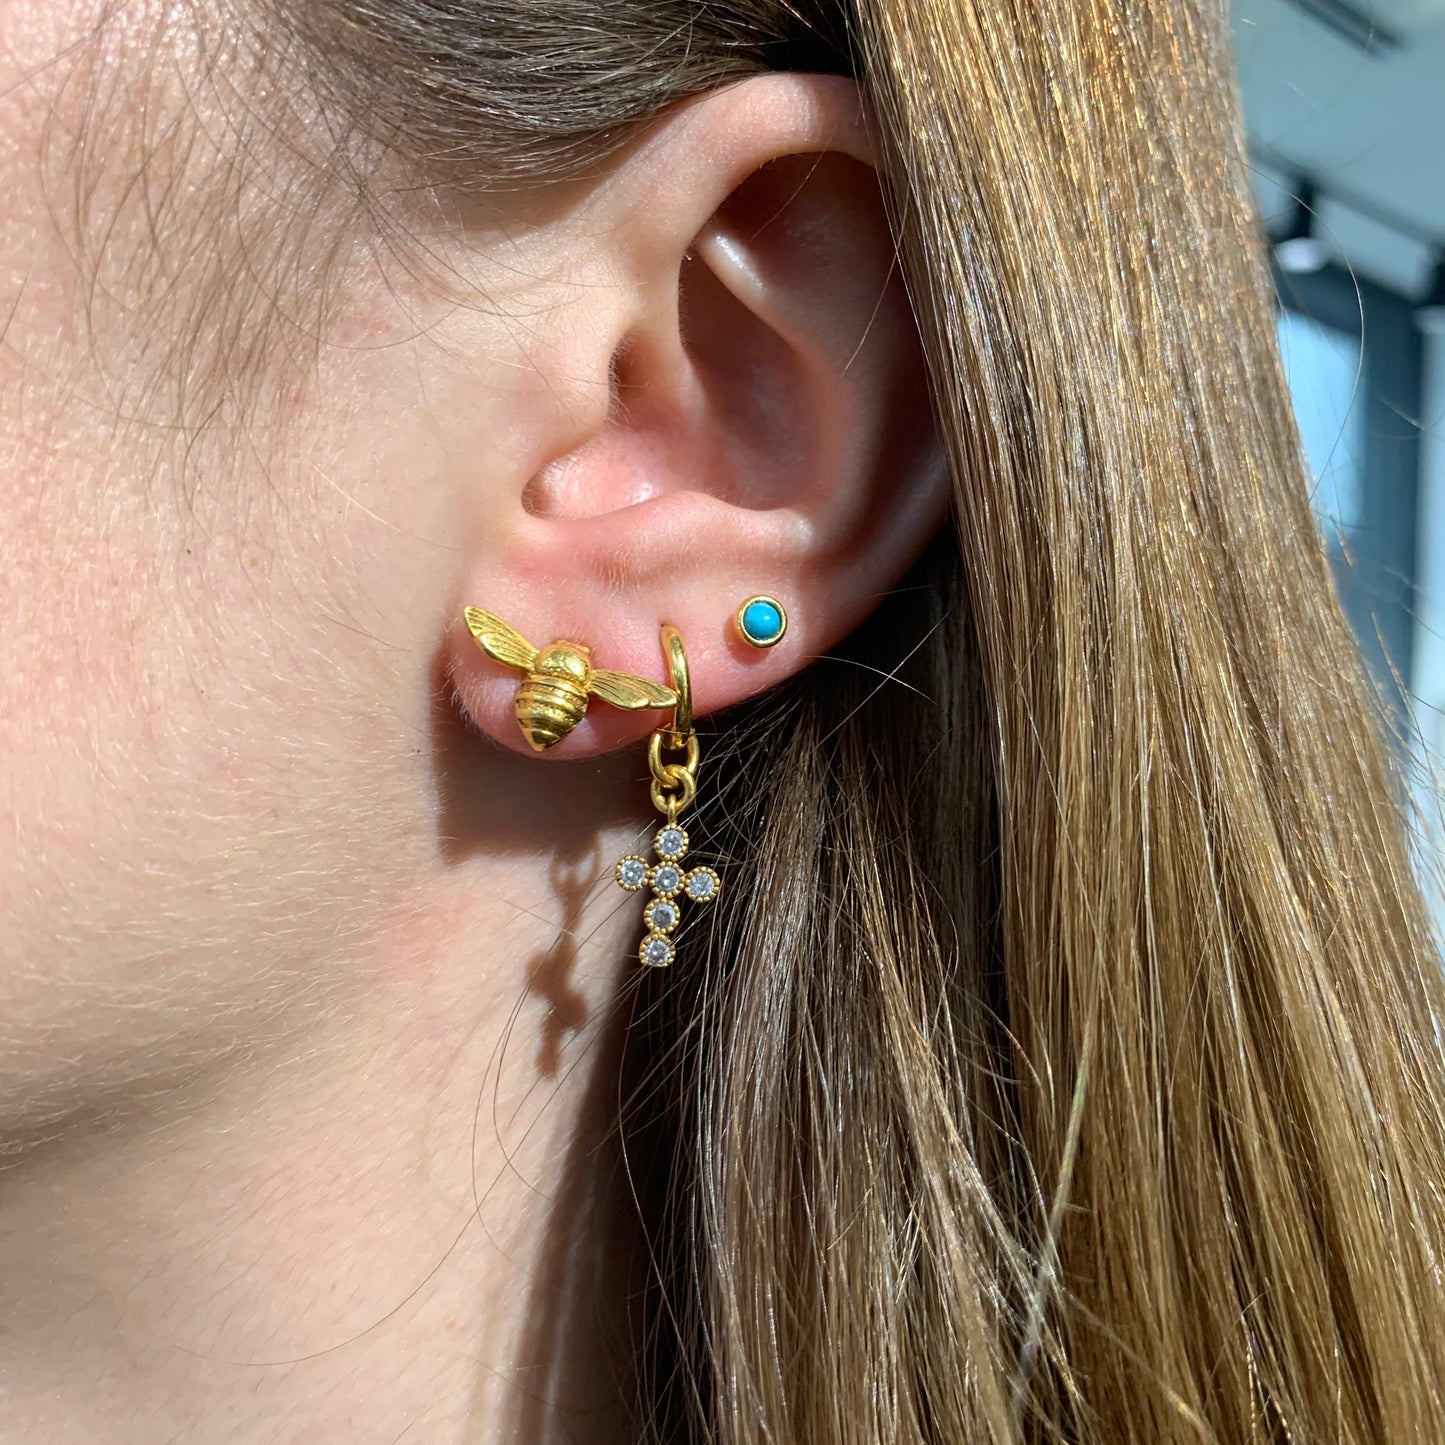 Single Malachite stone earrings